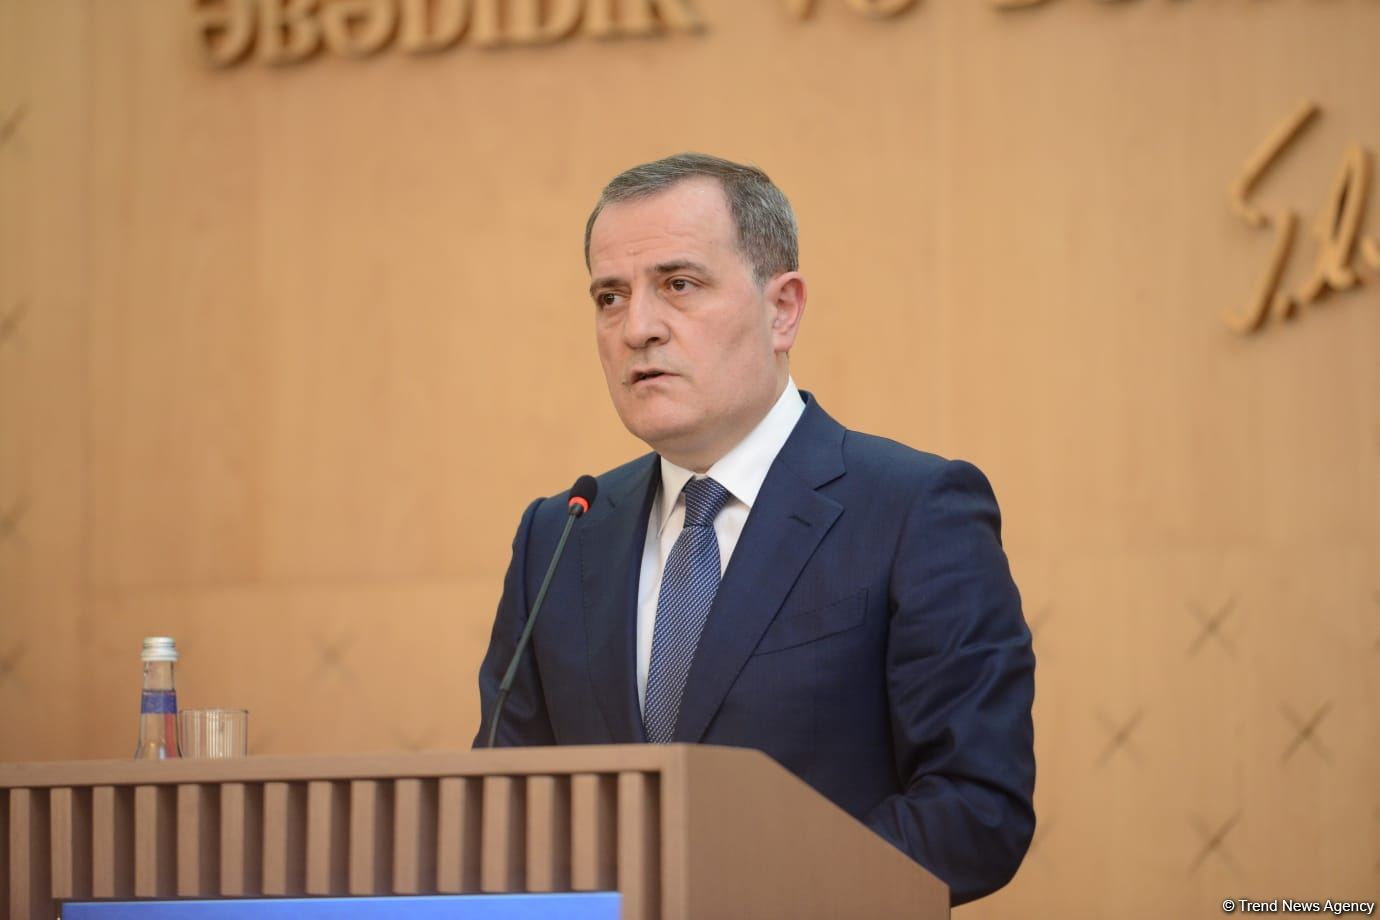 Economic relations between Azerbaijan, Turkey - at high level, FM says